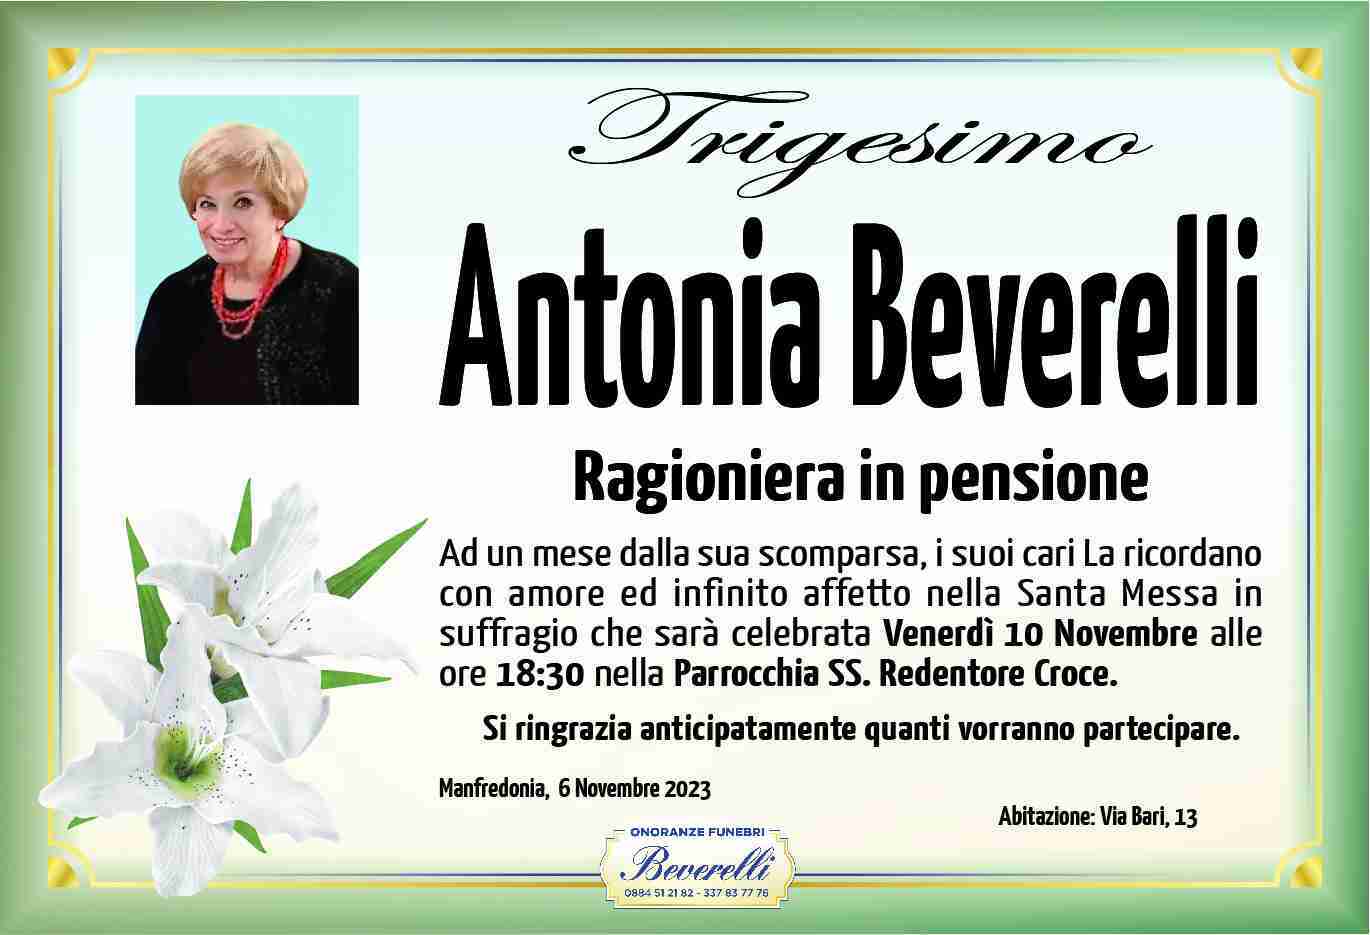 Antonia Beverelli